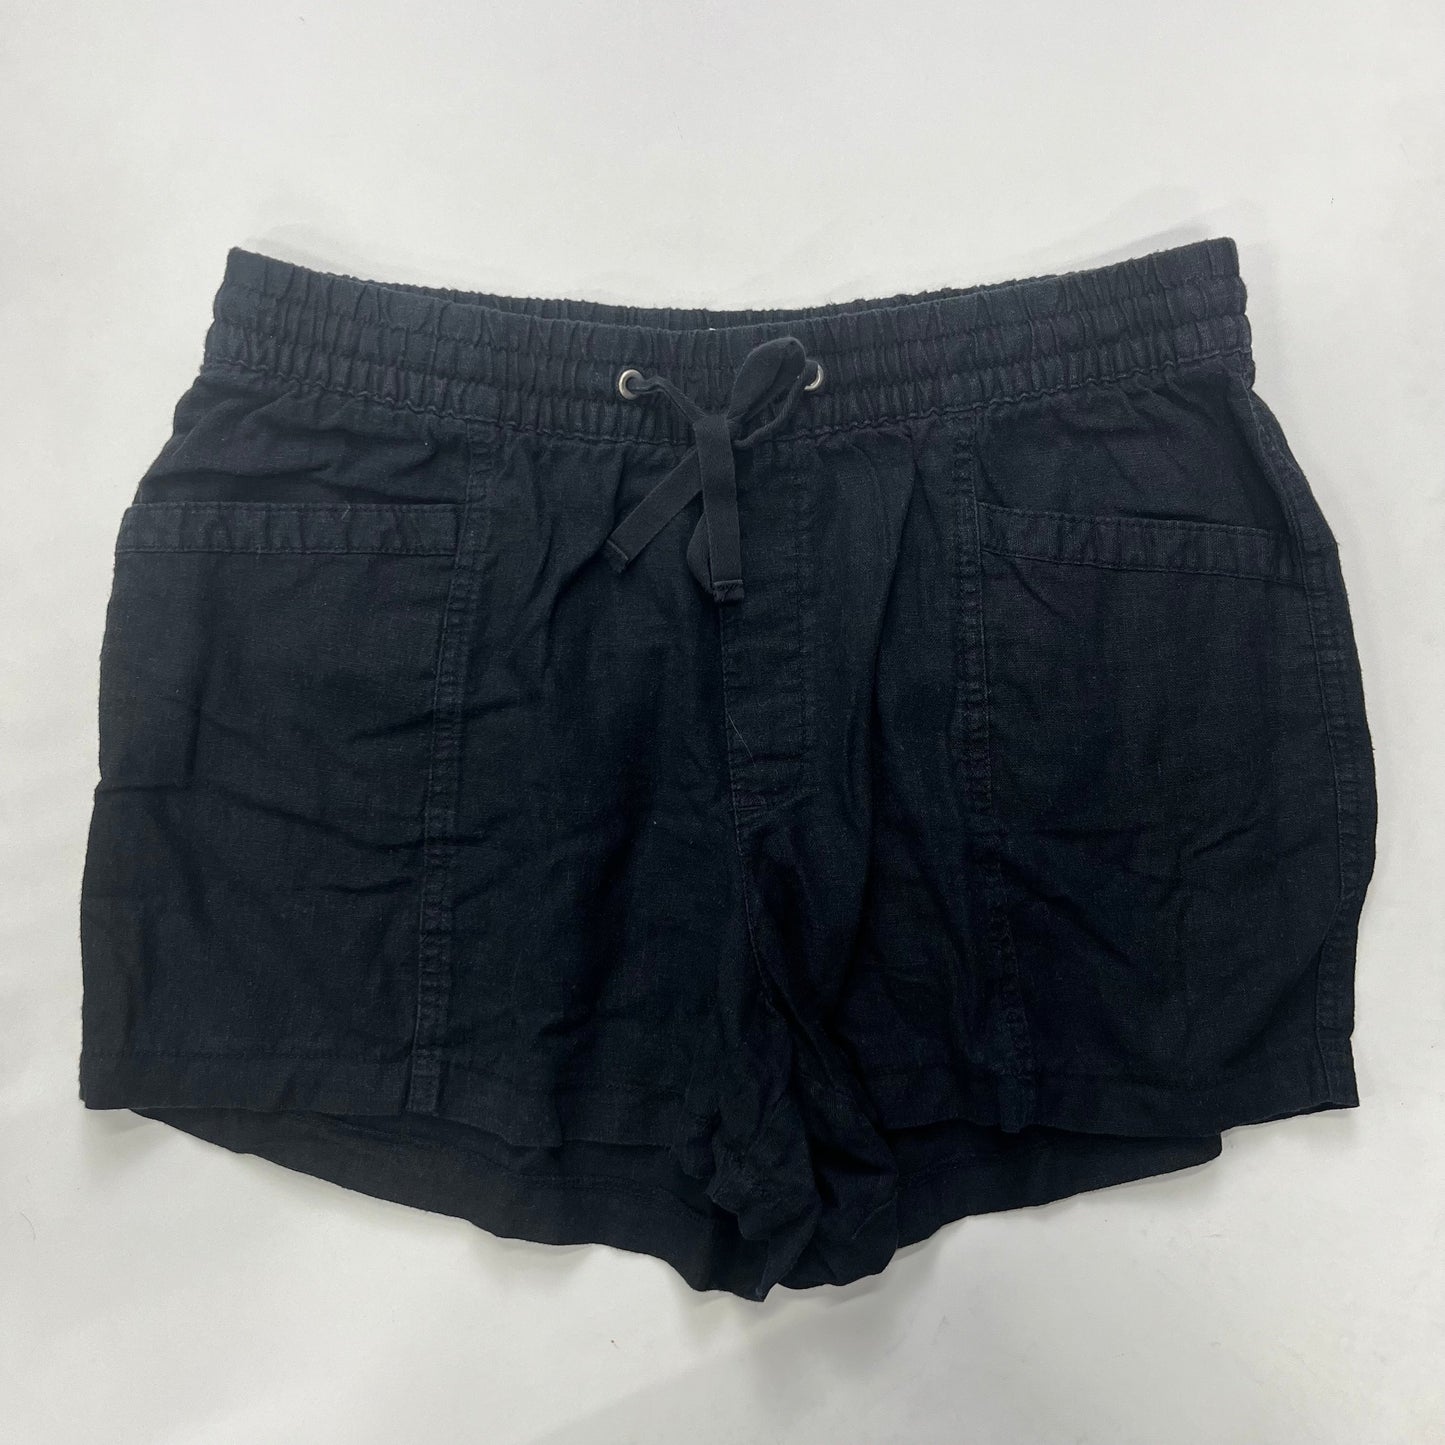 Black Shorts Gap, Size 12